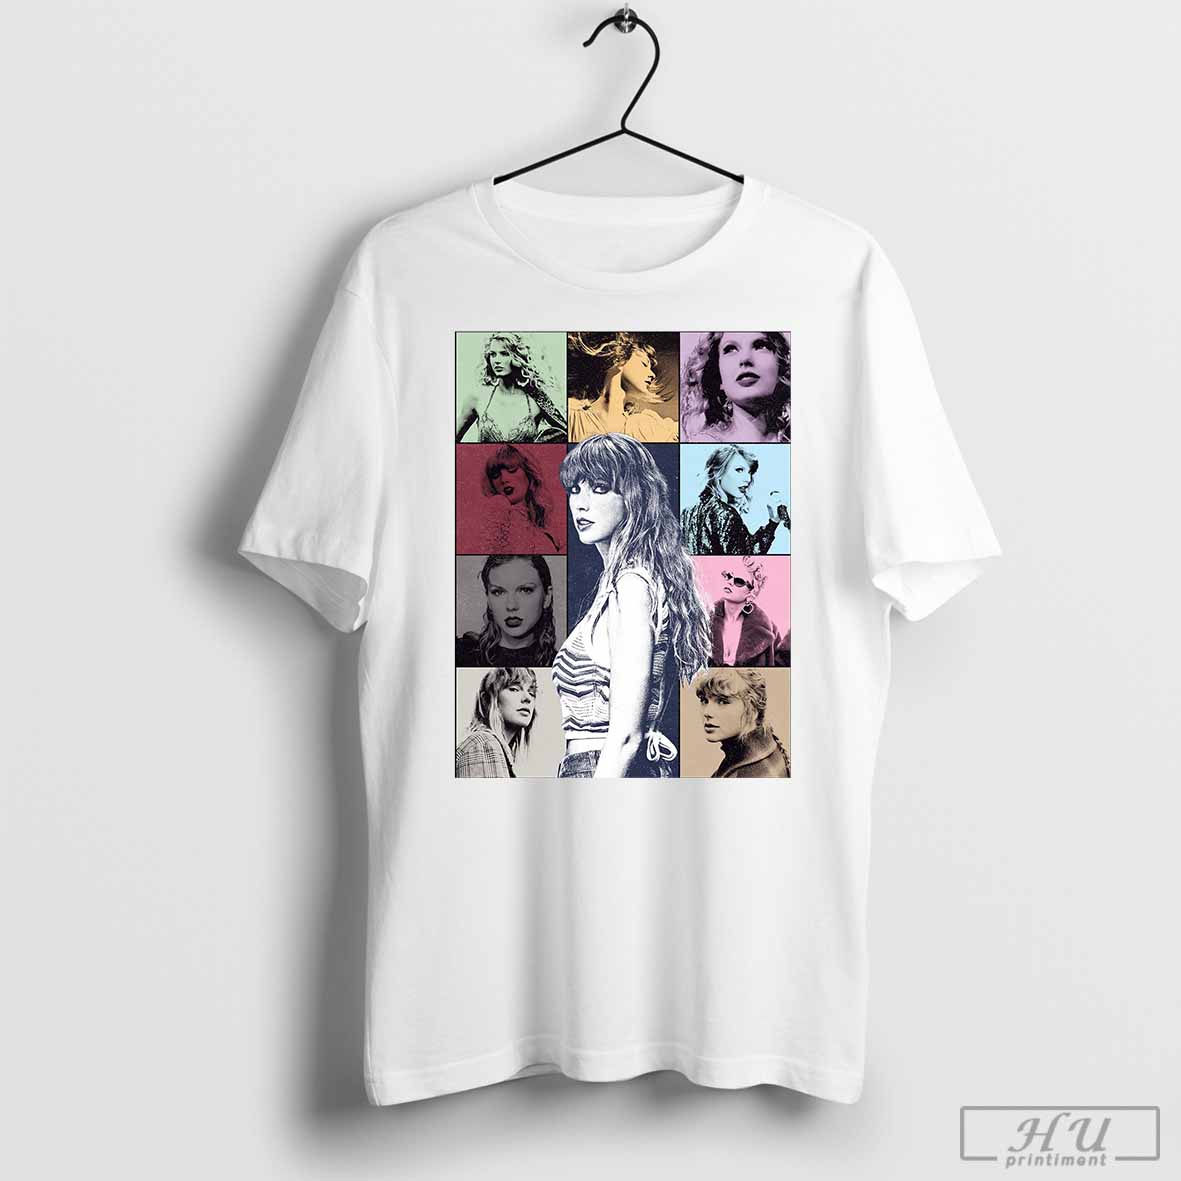 Tay𝗹𝗼𝗿 Swift Tshirt, The 𝘌𝘳𝘢𝘴s Tour Shirts Tay𝗹𝗼𝗿 Swift